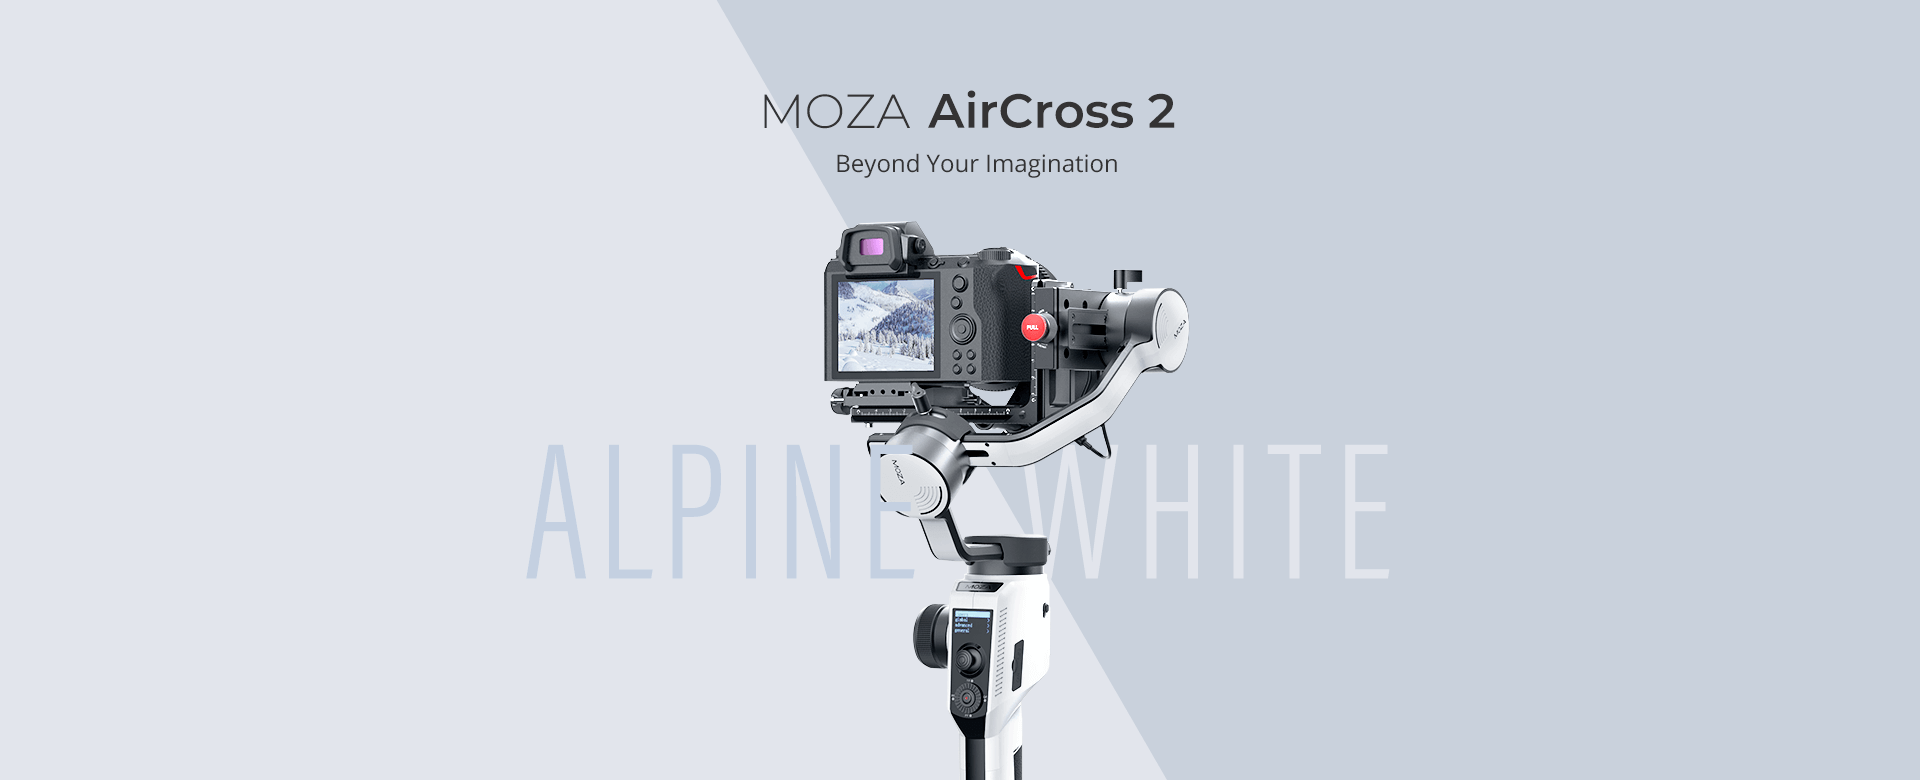 MOZA AirCross 2 Beyond Your Imagination